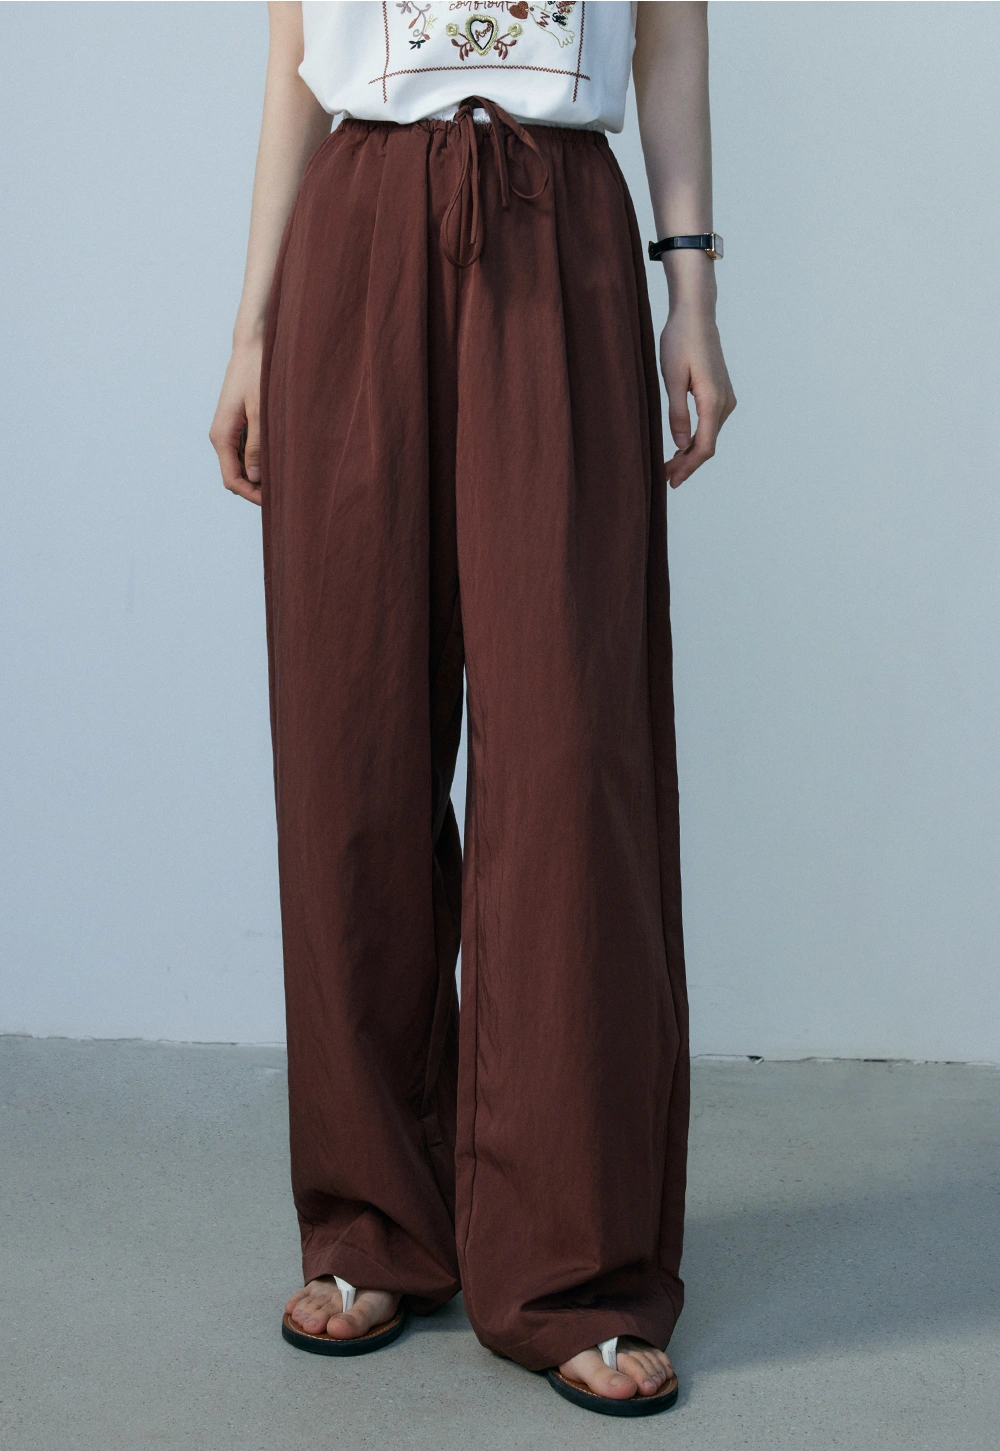 Women's Chocolate Brown Wide-Leg Pants - Drawstring Waist, Flowy and Comfortable